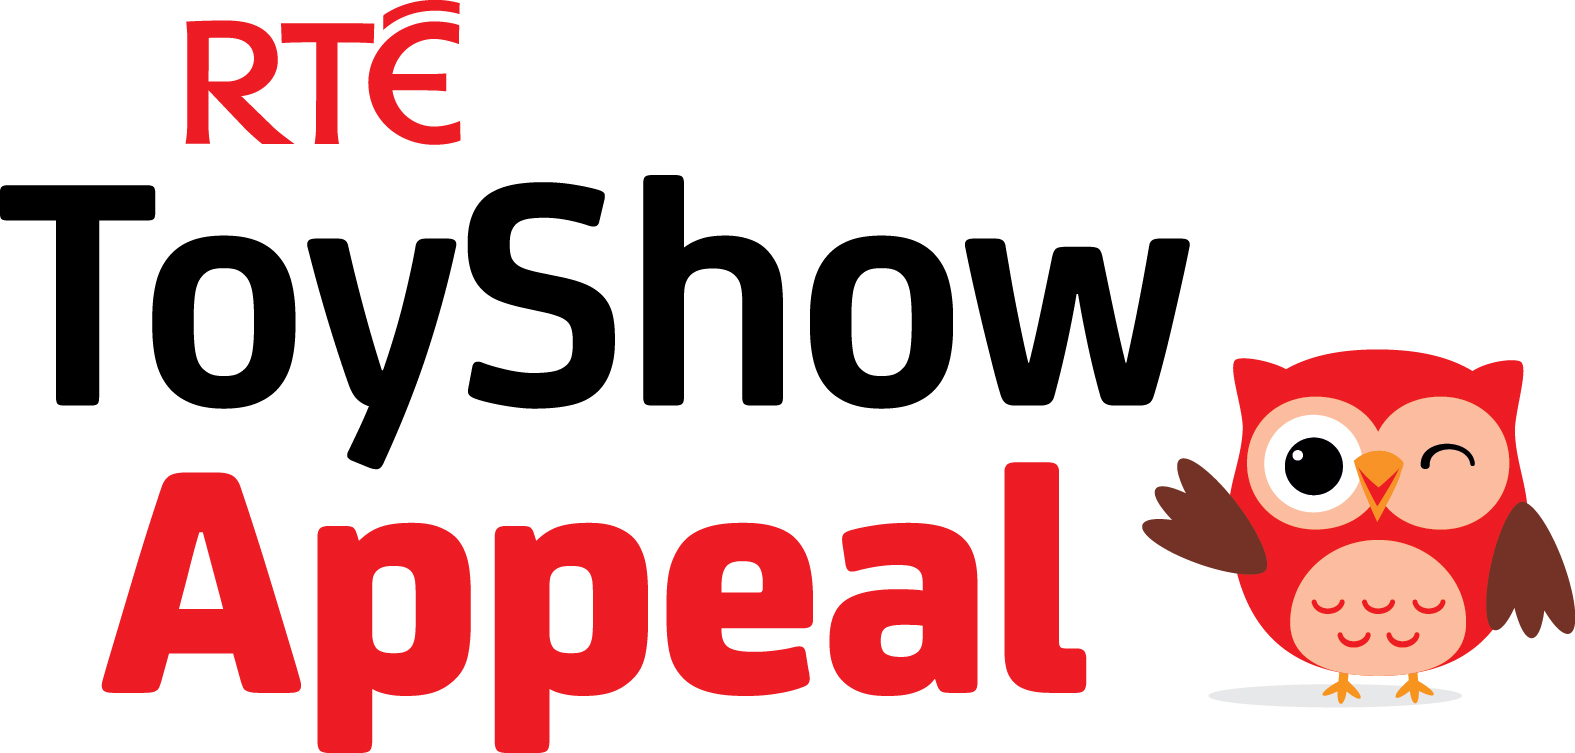 RTE_ToyShow_Appeal_logo_hires